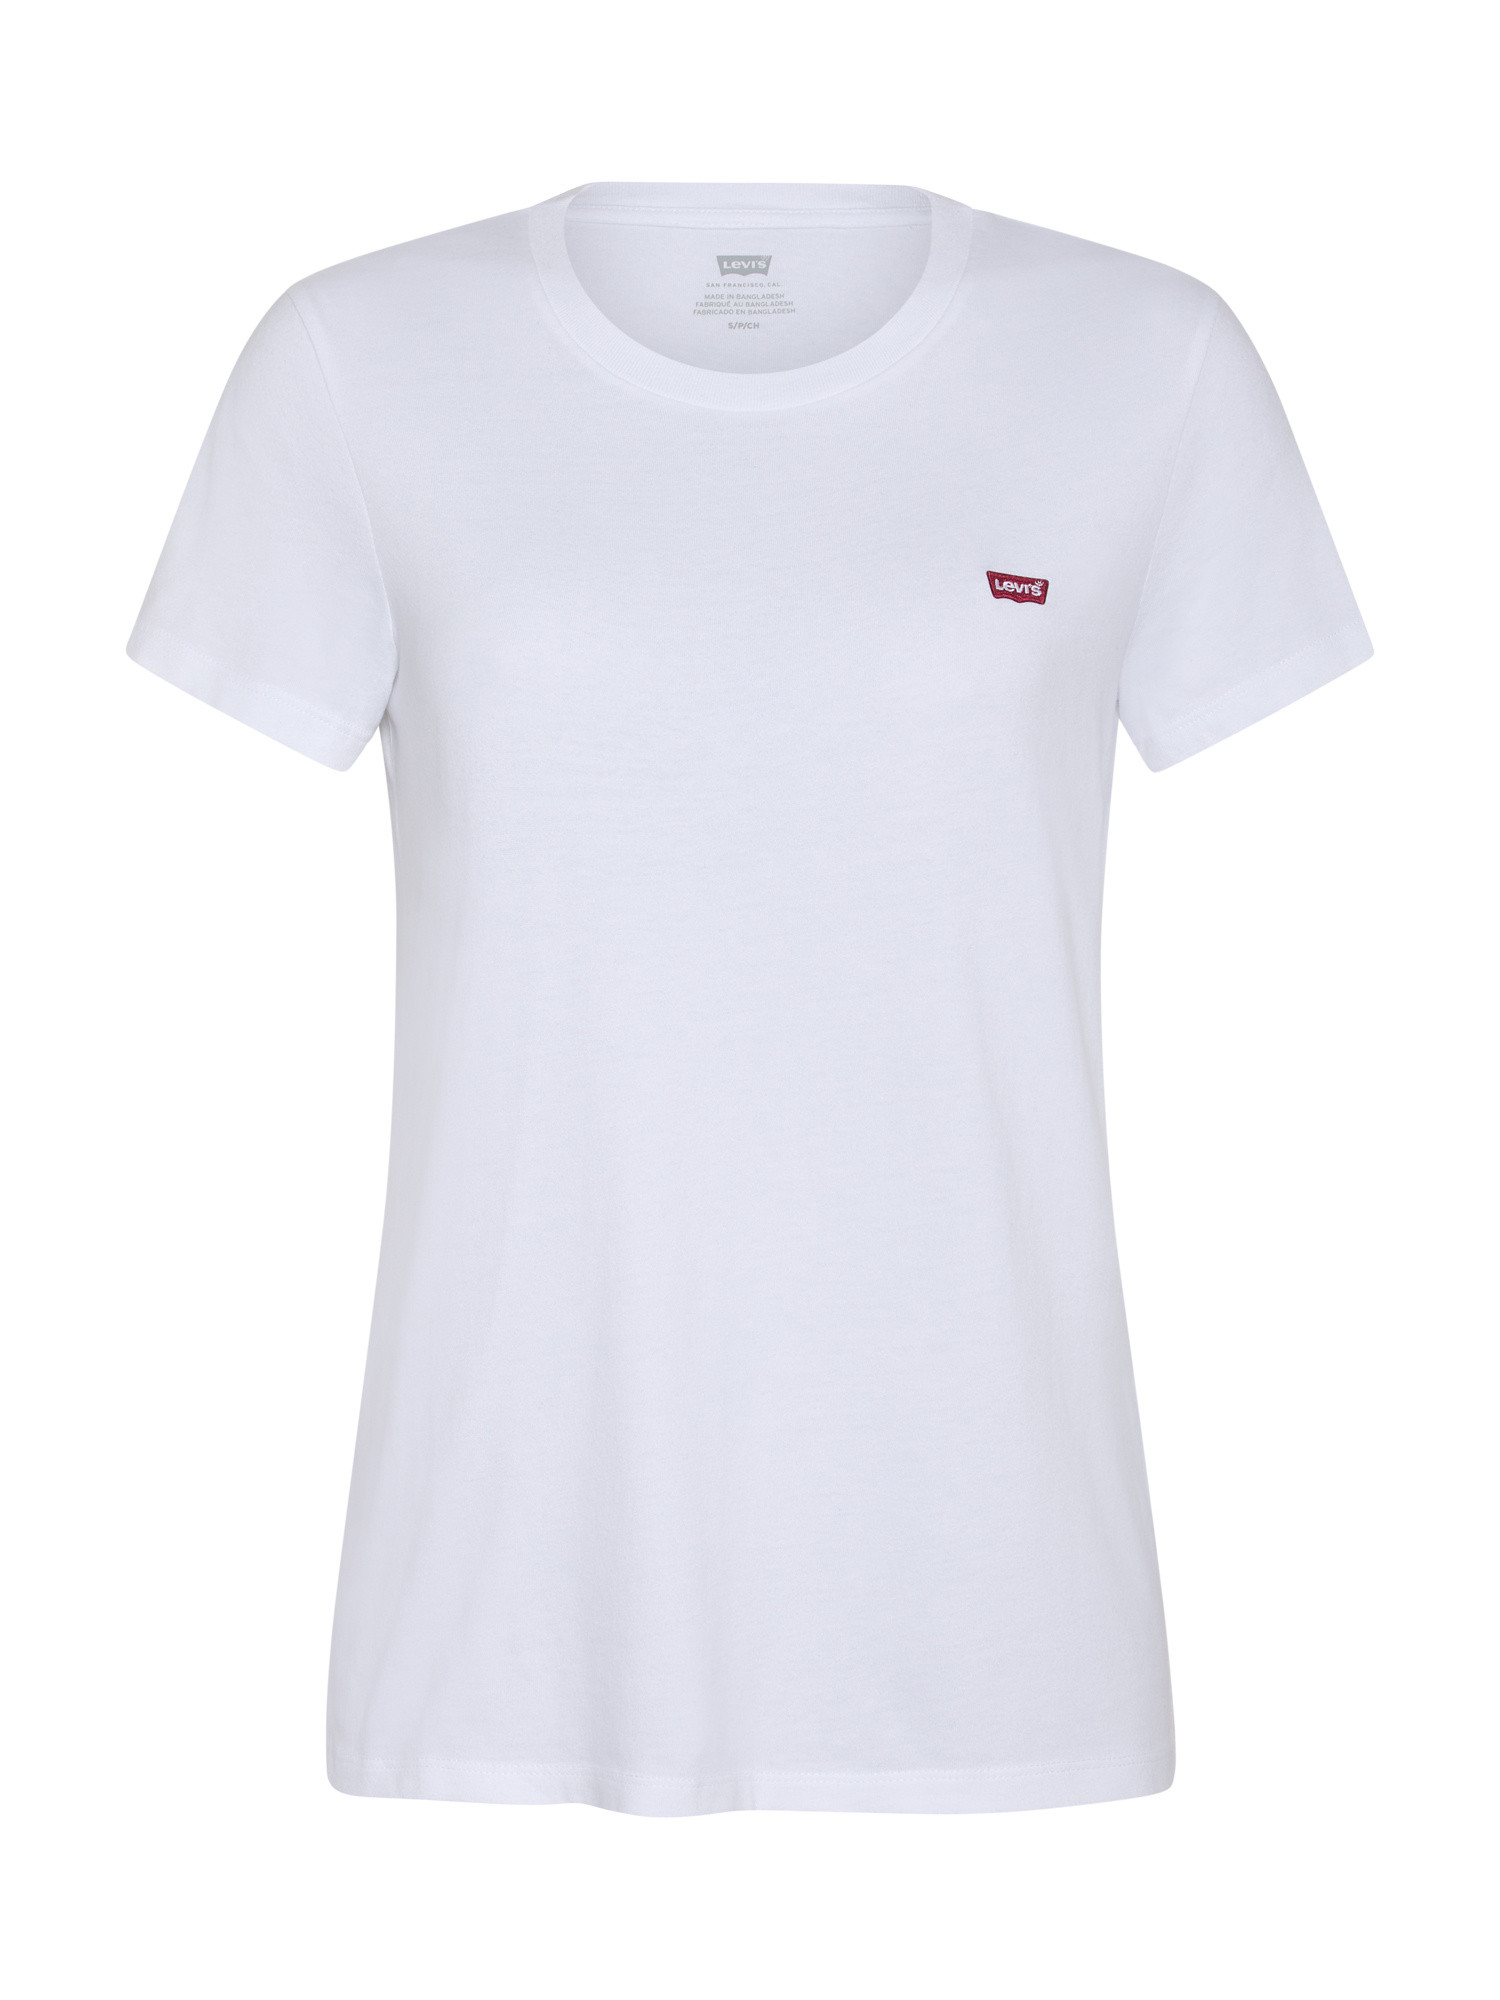 Levi's - T-shirt con logo, Bianco, large image number 0